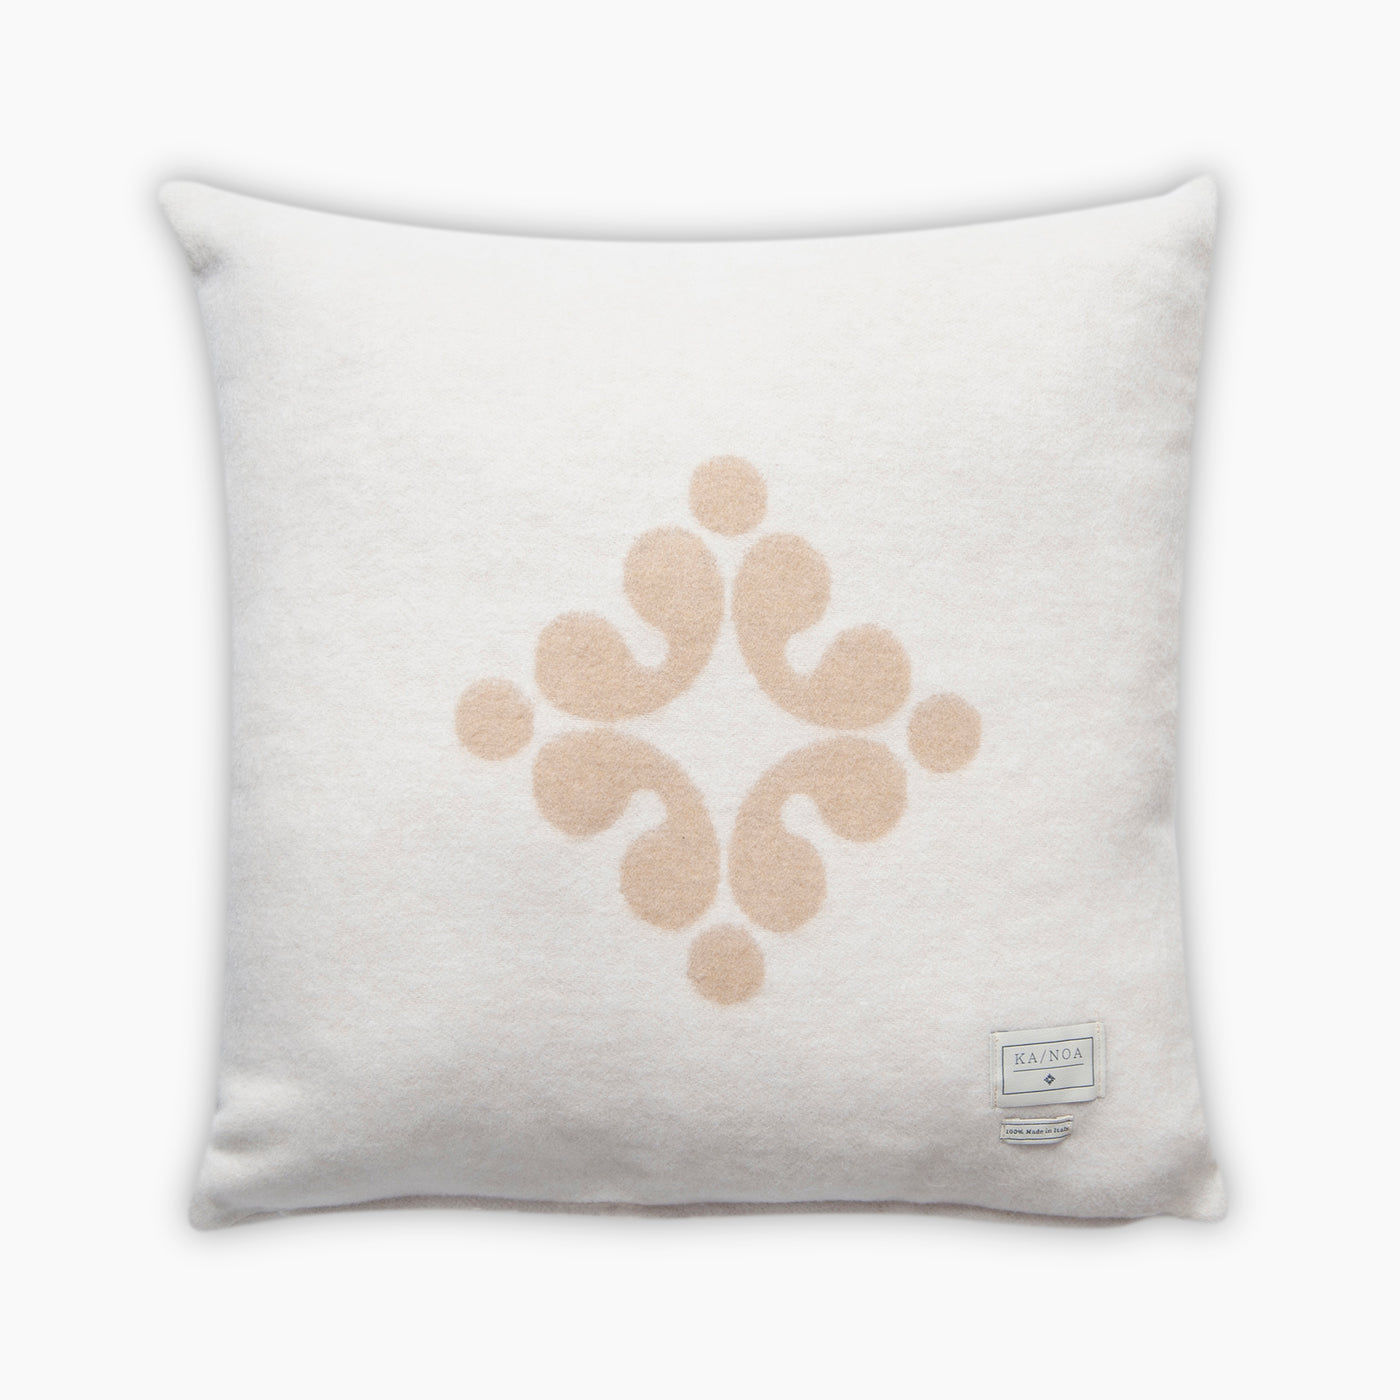 Solferino Wool Blend KA/NOA Logo Pillow